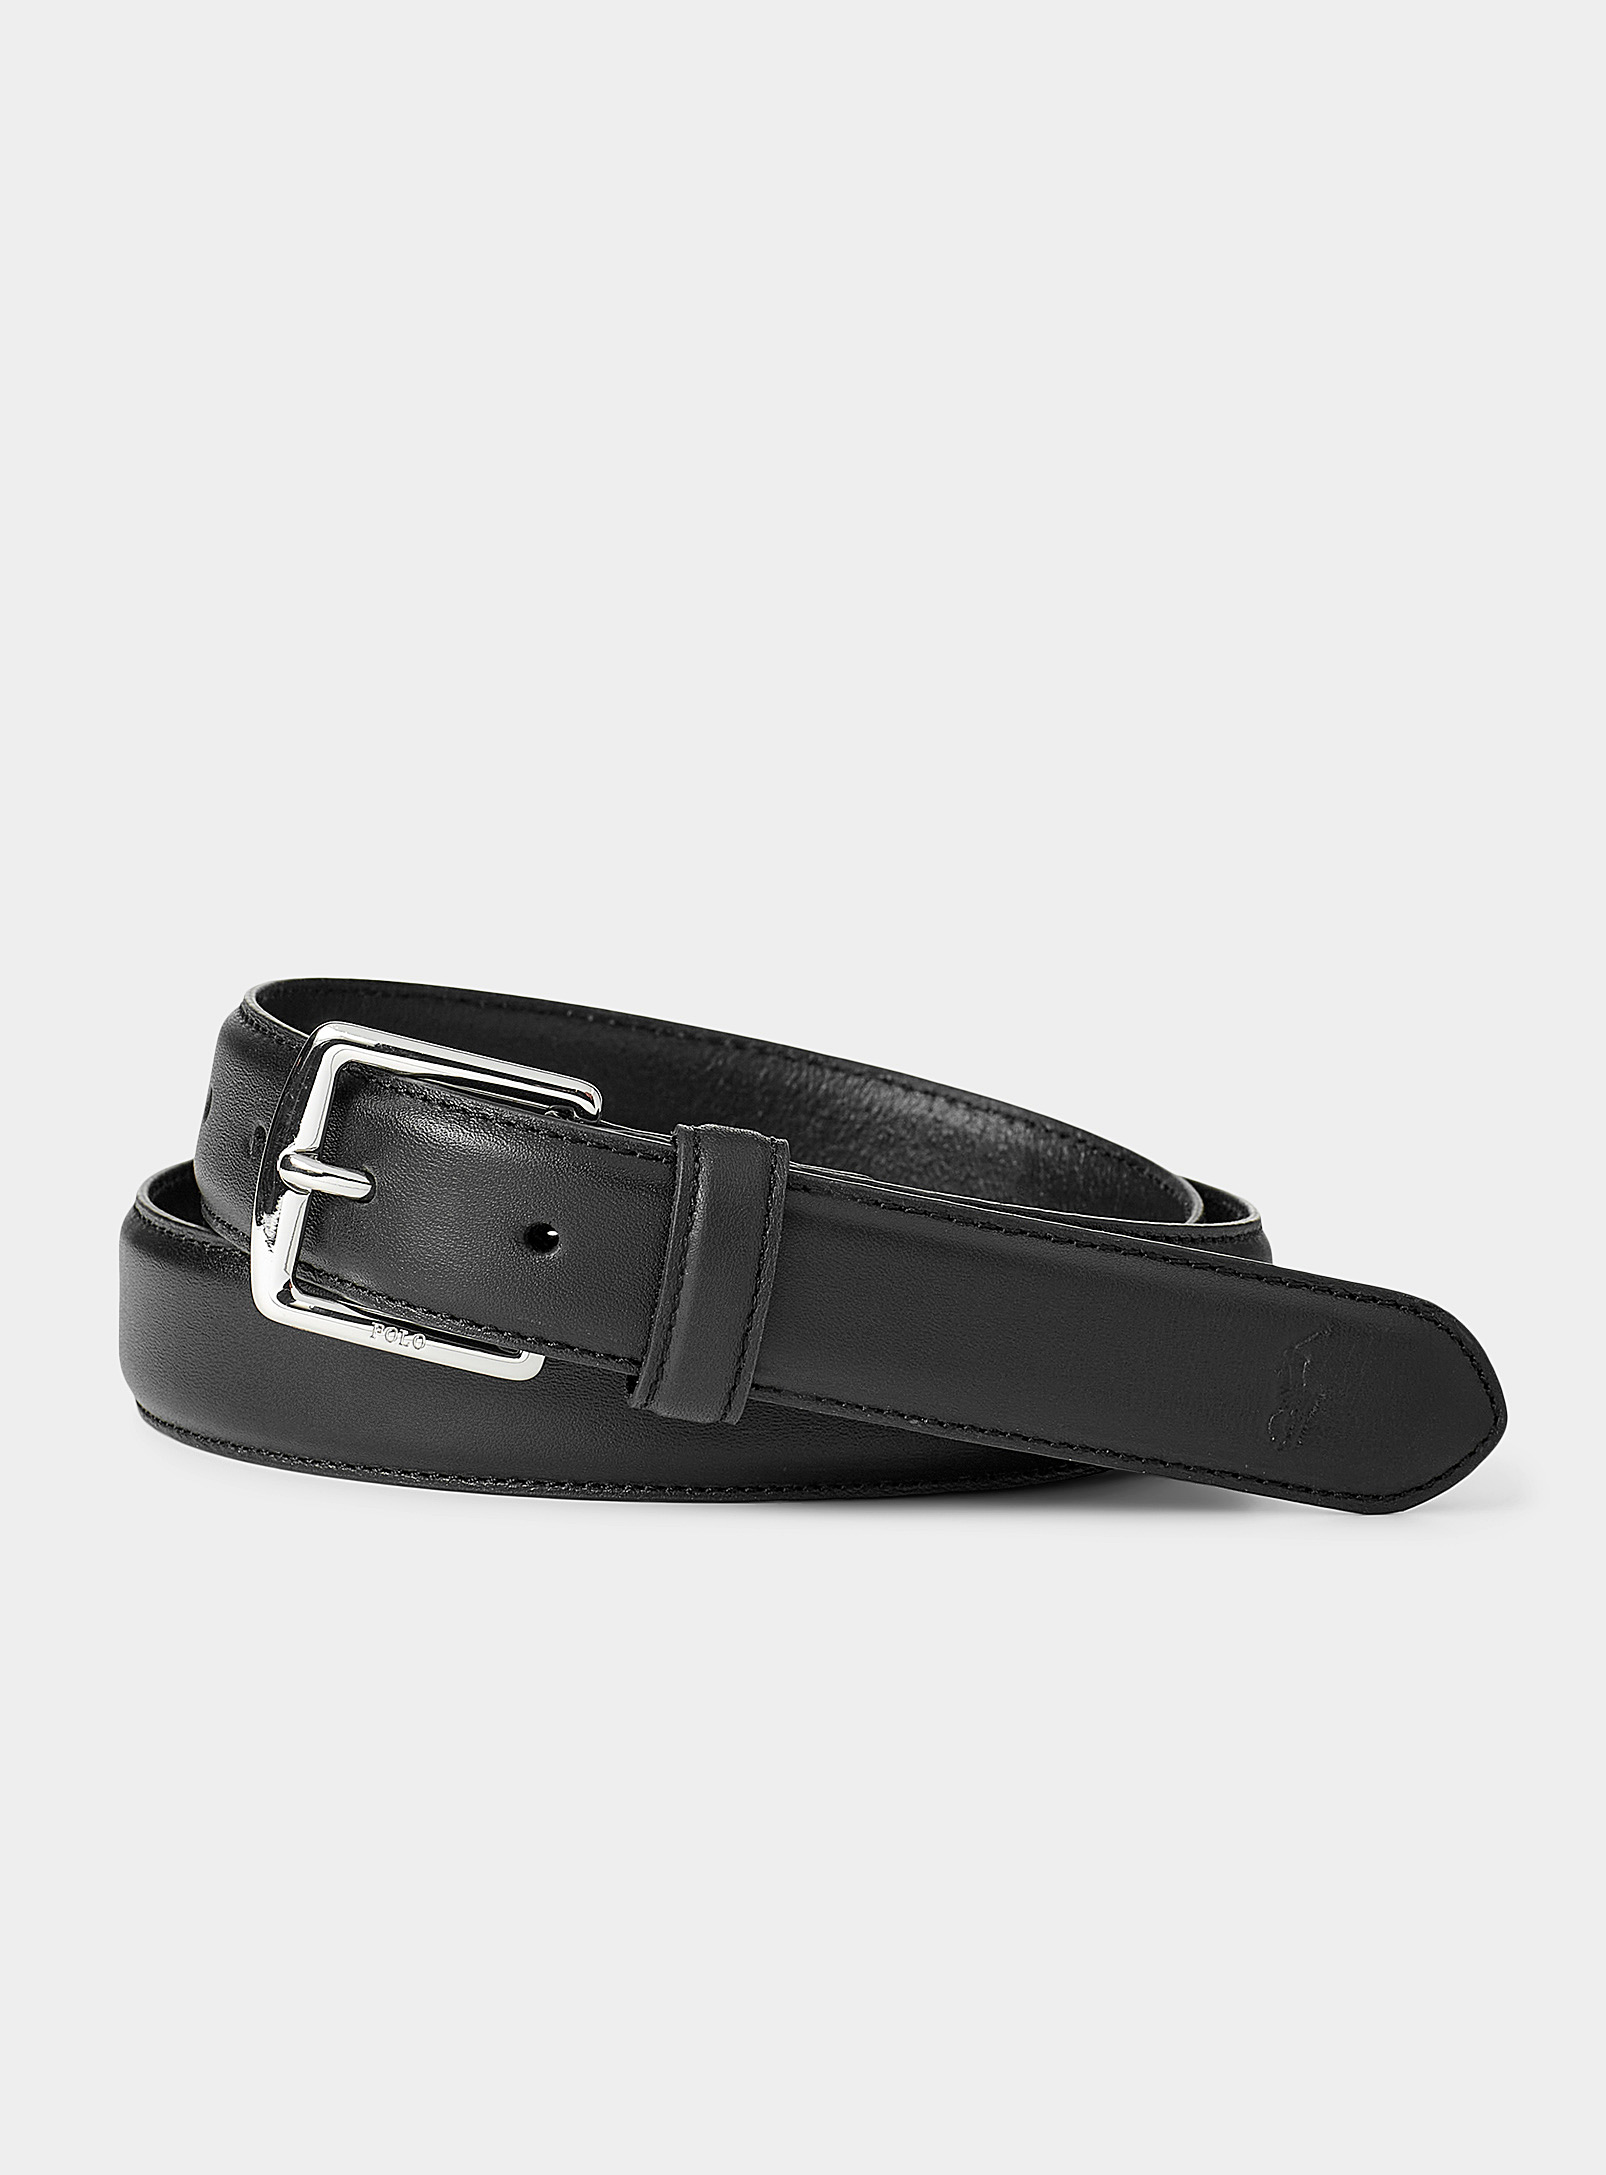 Polo Ralph Lauren Silver Branded Leather Belt In Black